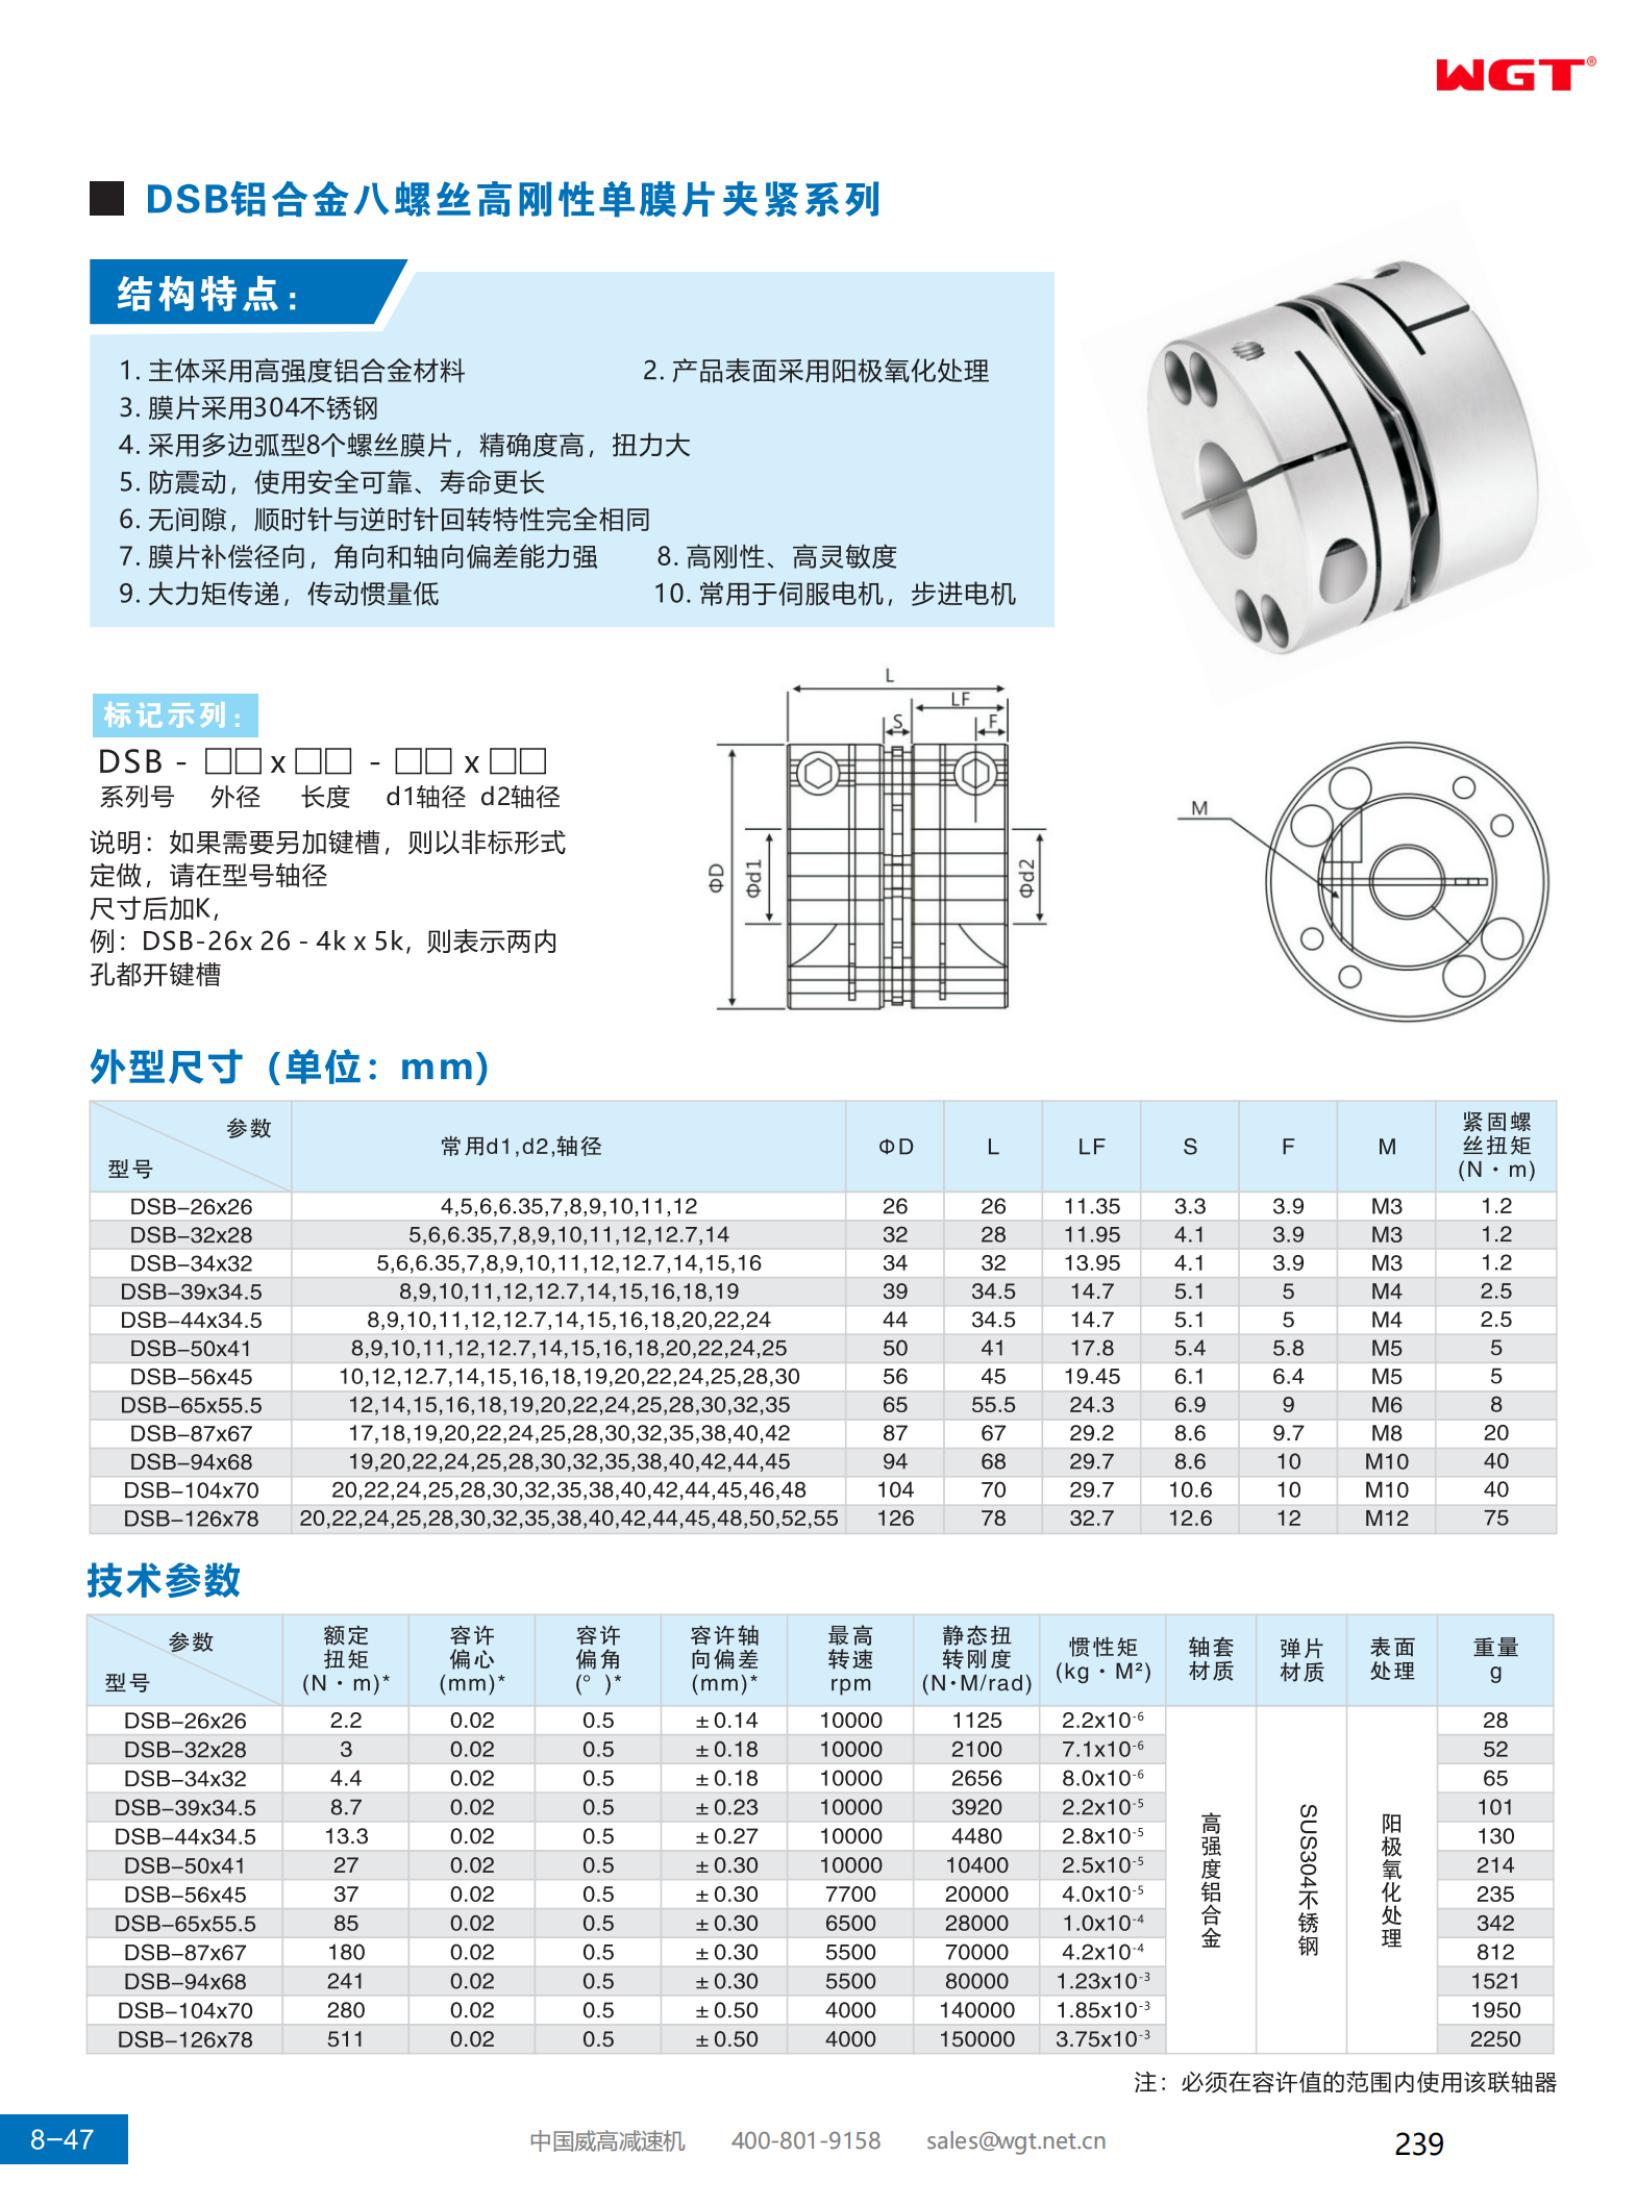 DSB aluminum alloy eight screw high rigidity single diaphragm clamping series